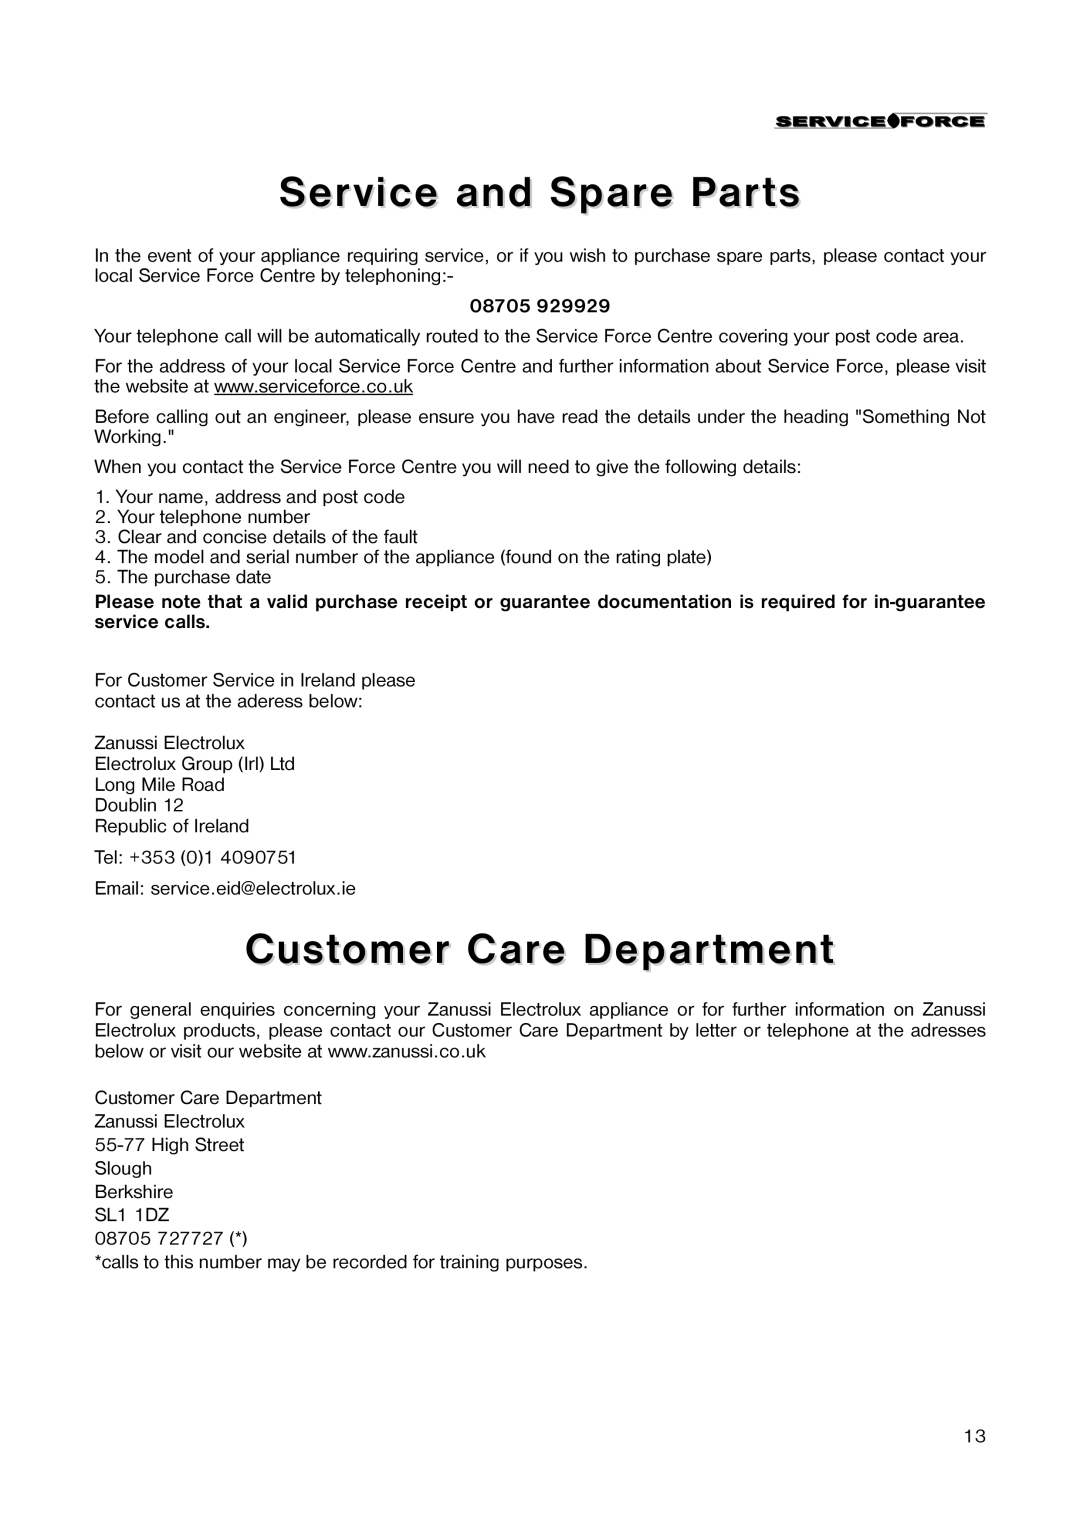 Zanussi ZEBF 351 W manual Service and Spare Parts, Customer Care Department, 08705 